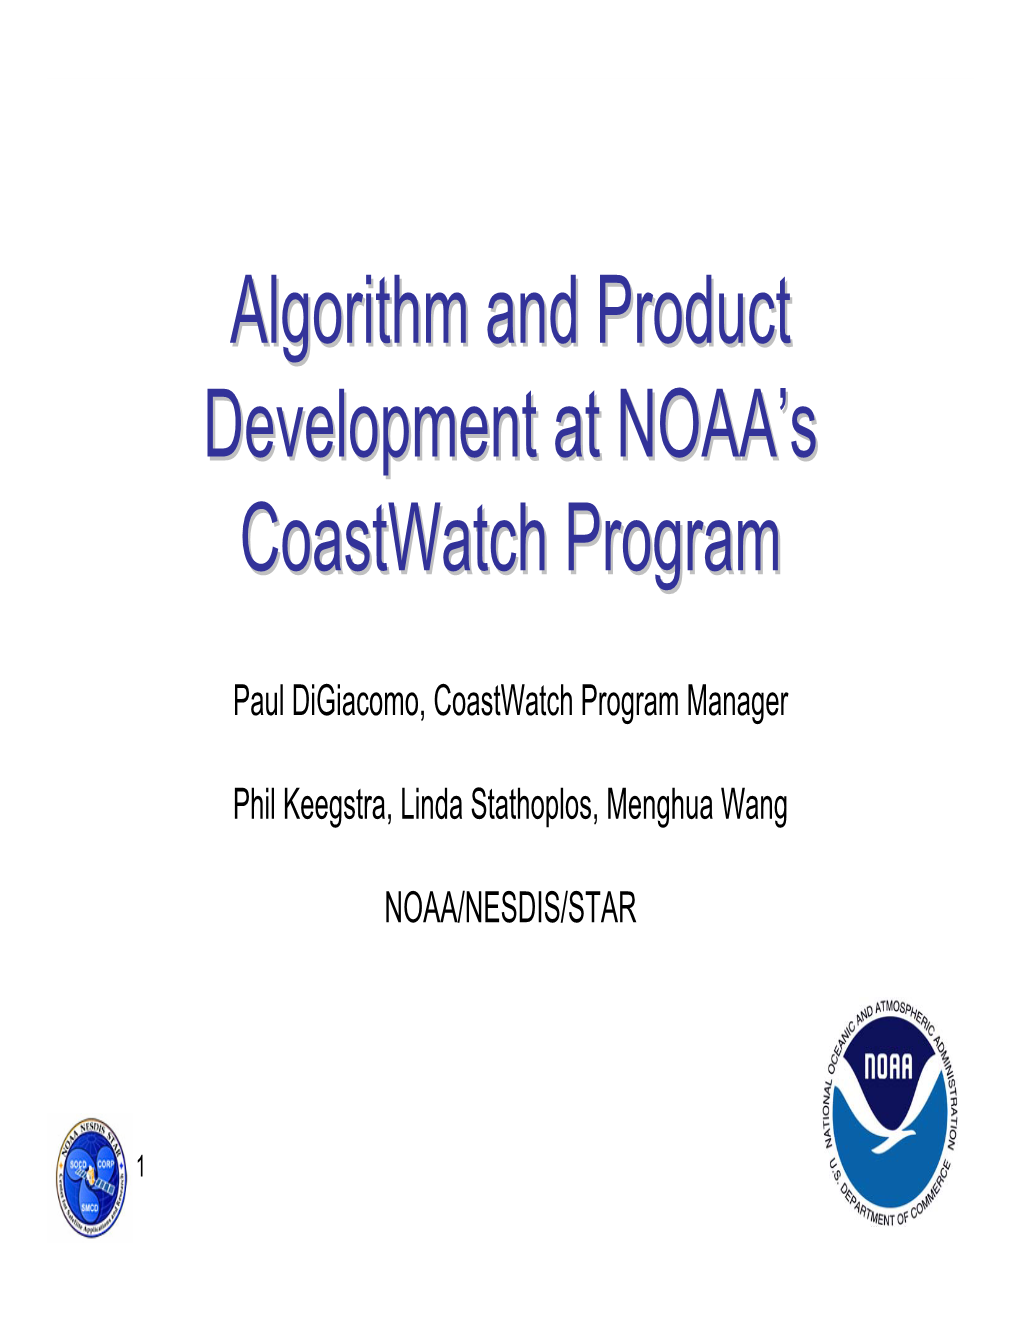 Coastwatchcoastwatch Programprogram